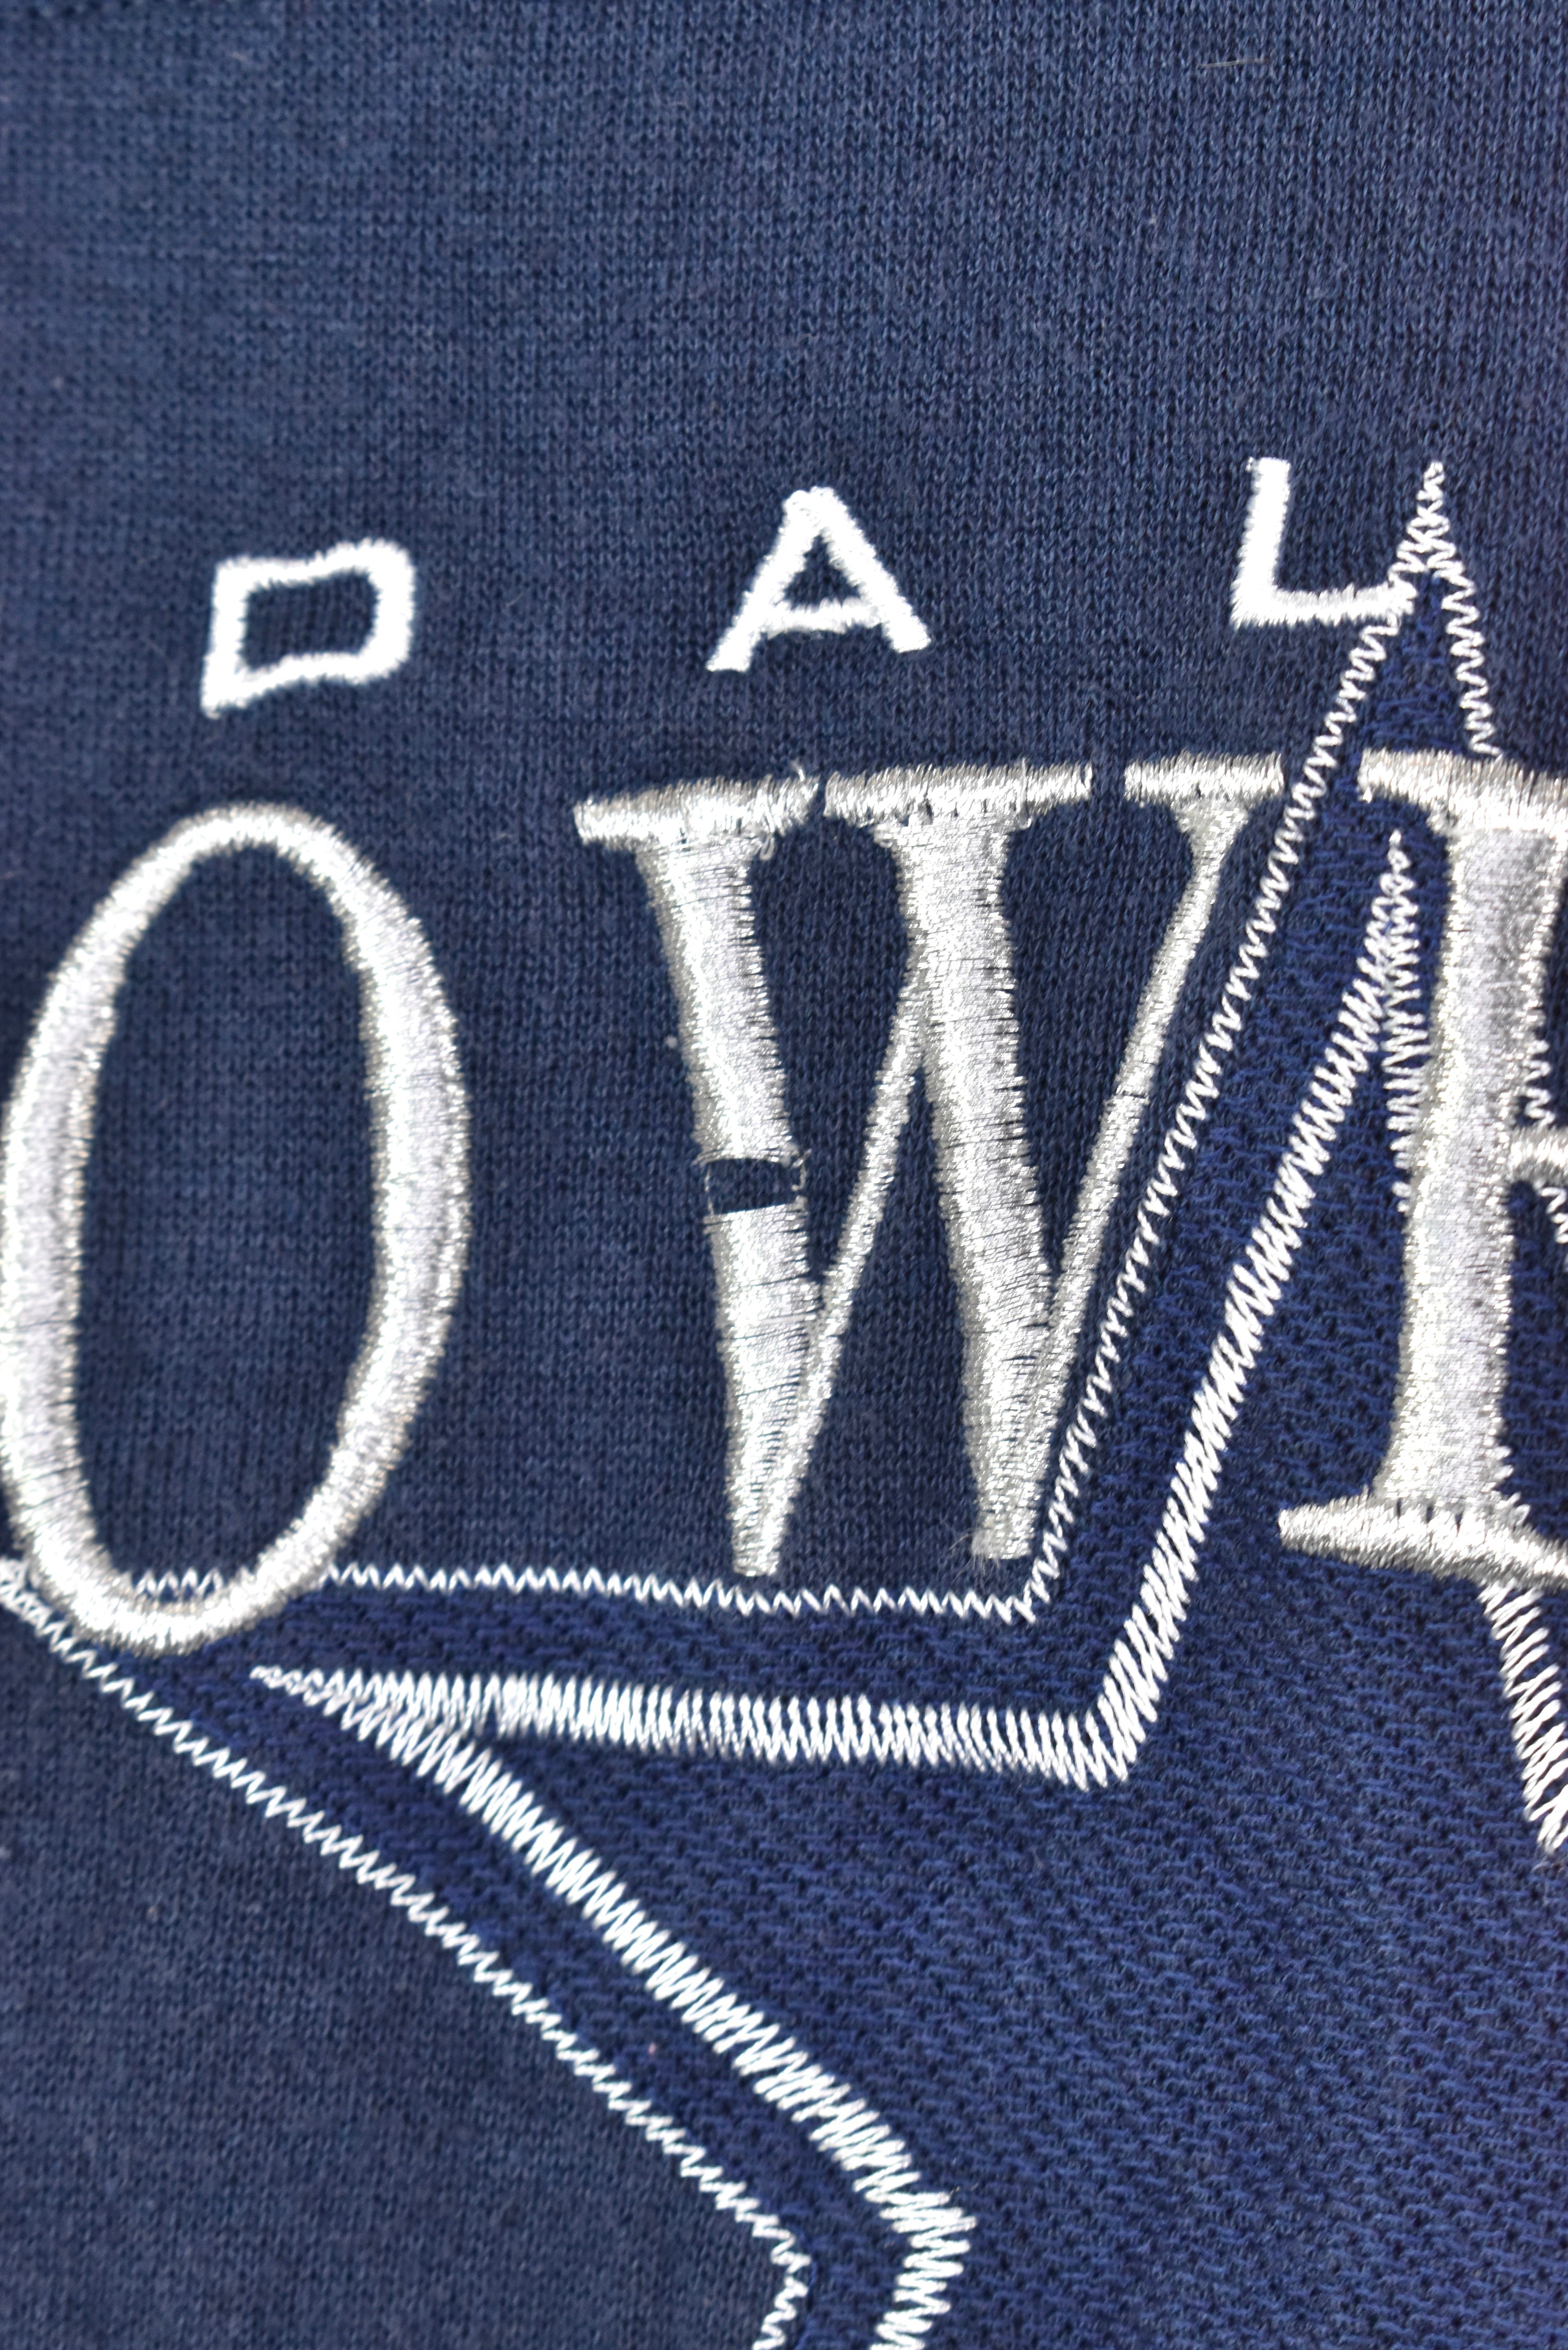 Vintage Dallas Cowboys sweatshirt, NFL embroidered crewneck - large, navy blue PRO SPORT